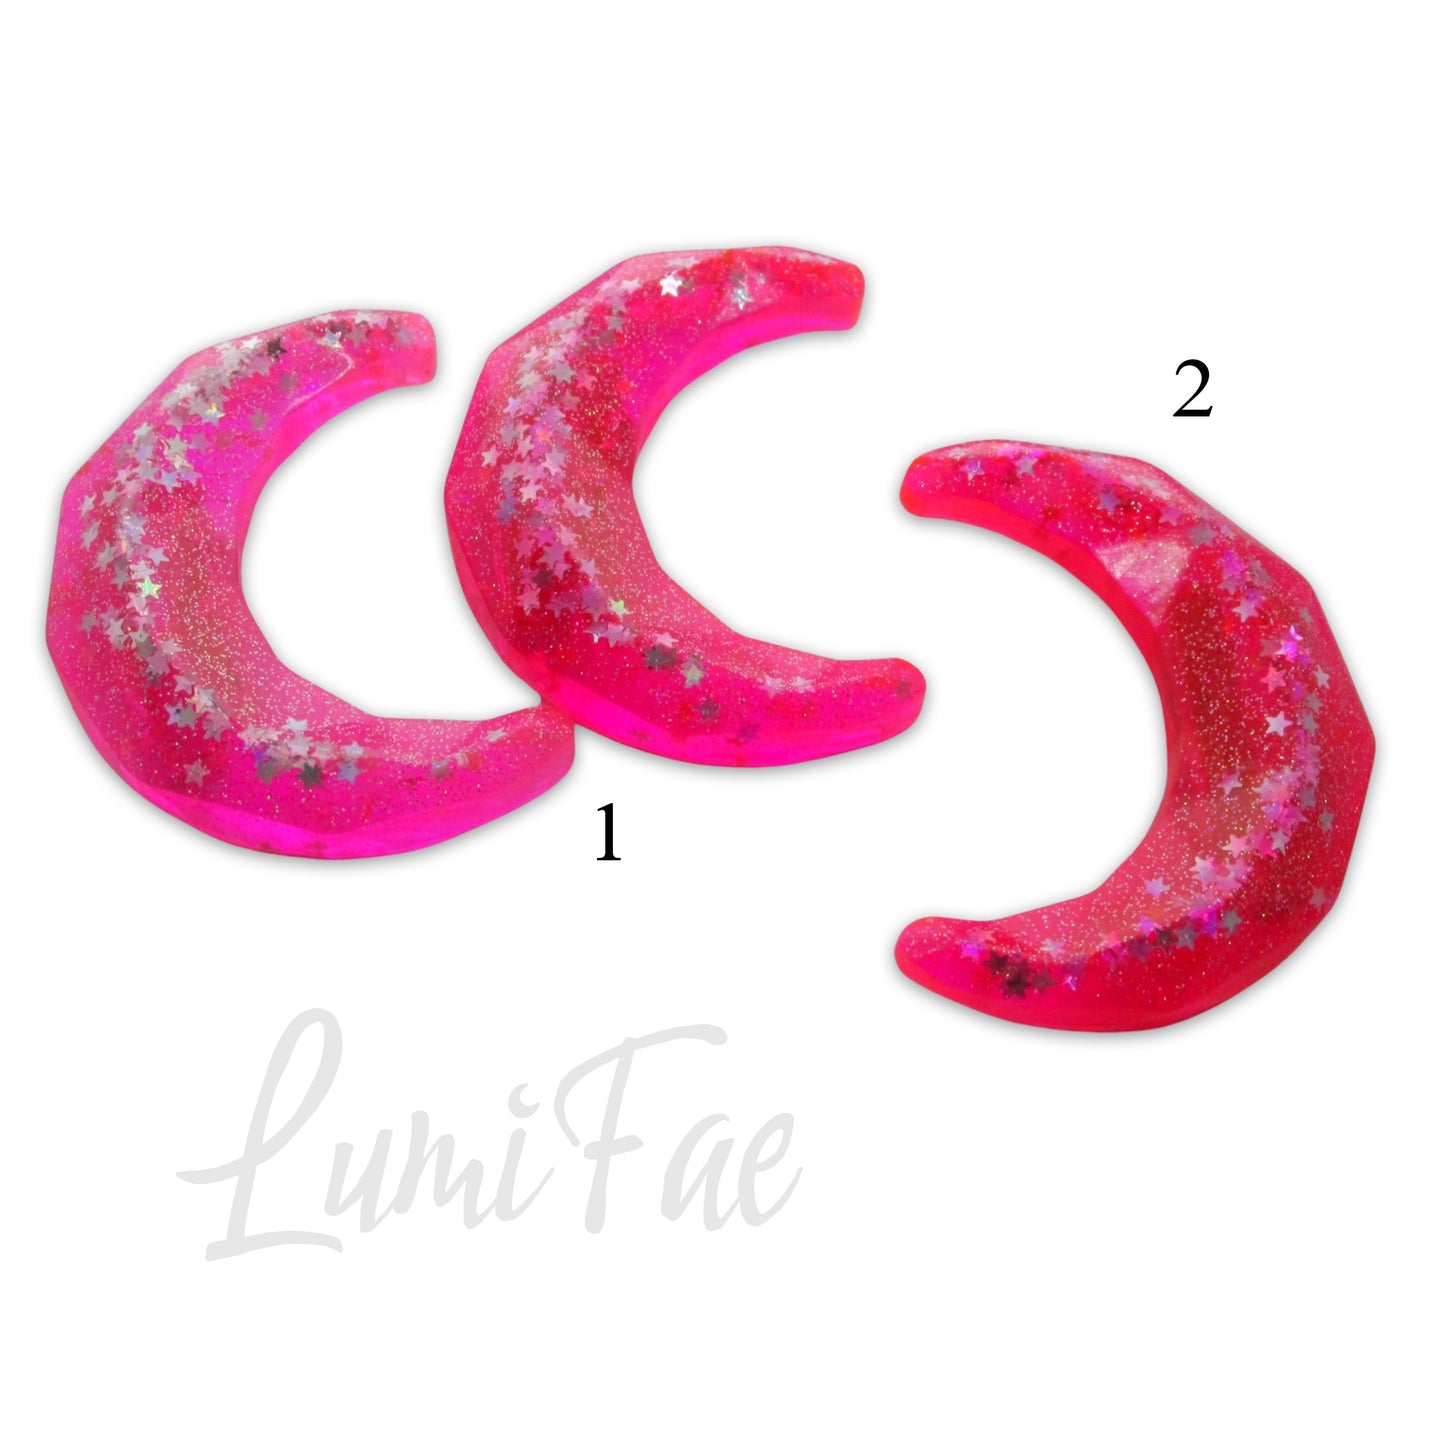 Hot Neon Pink Sparkly Star Glitter Moon Hair clip, 2.5”